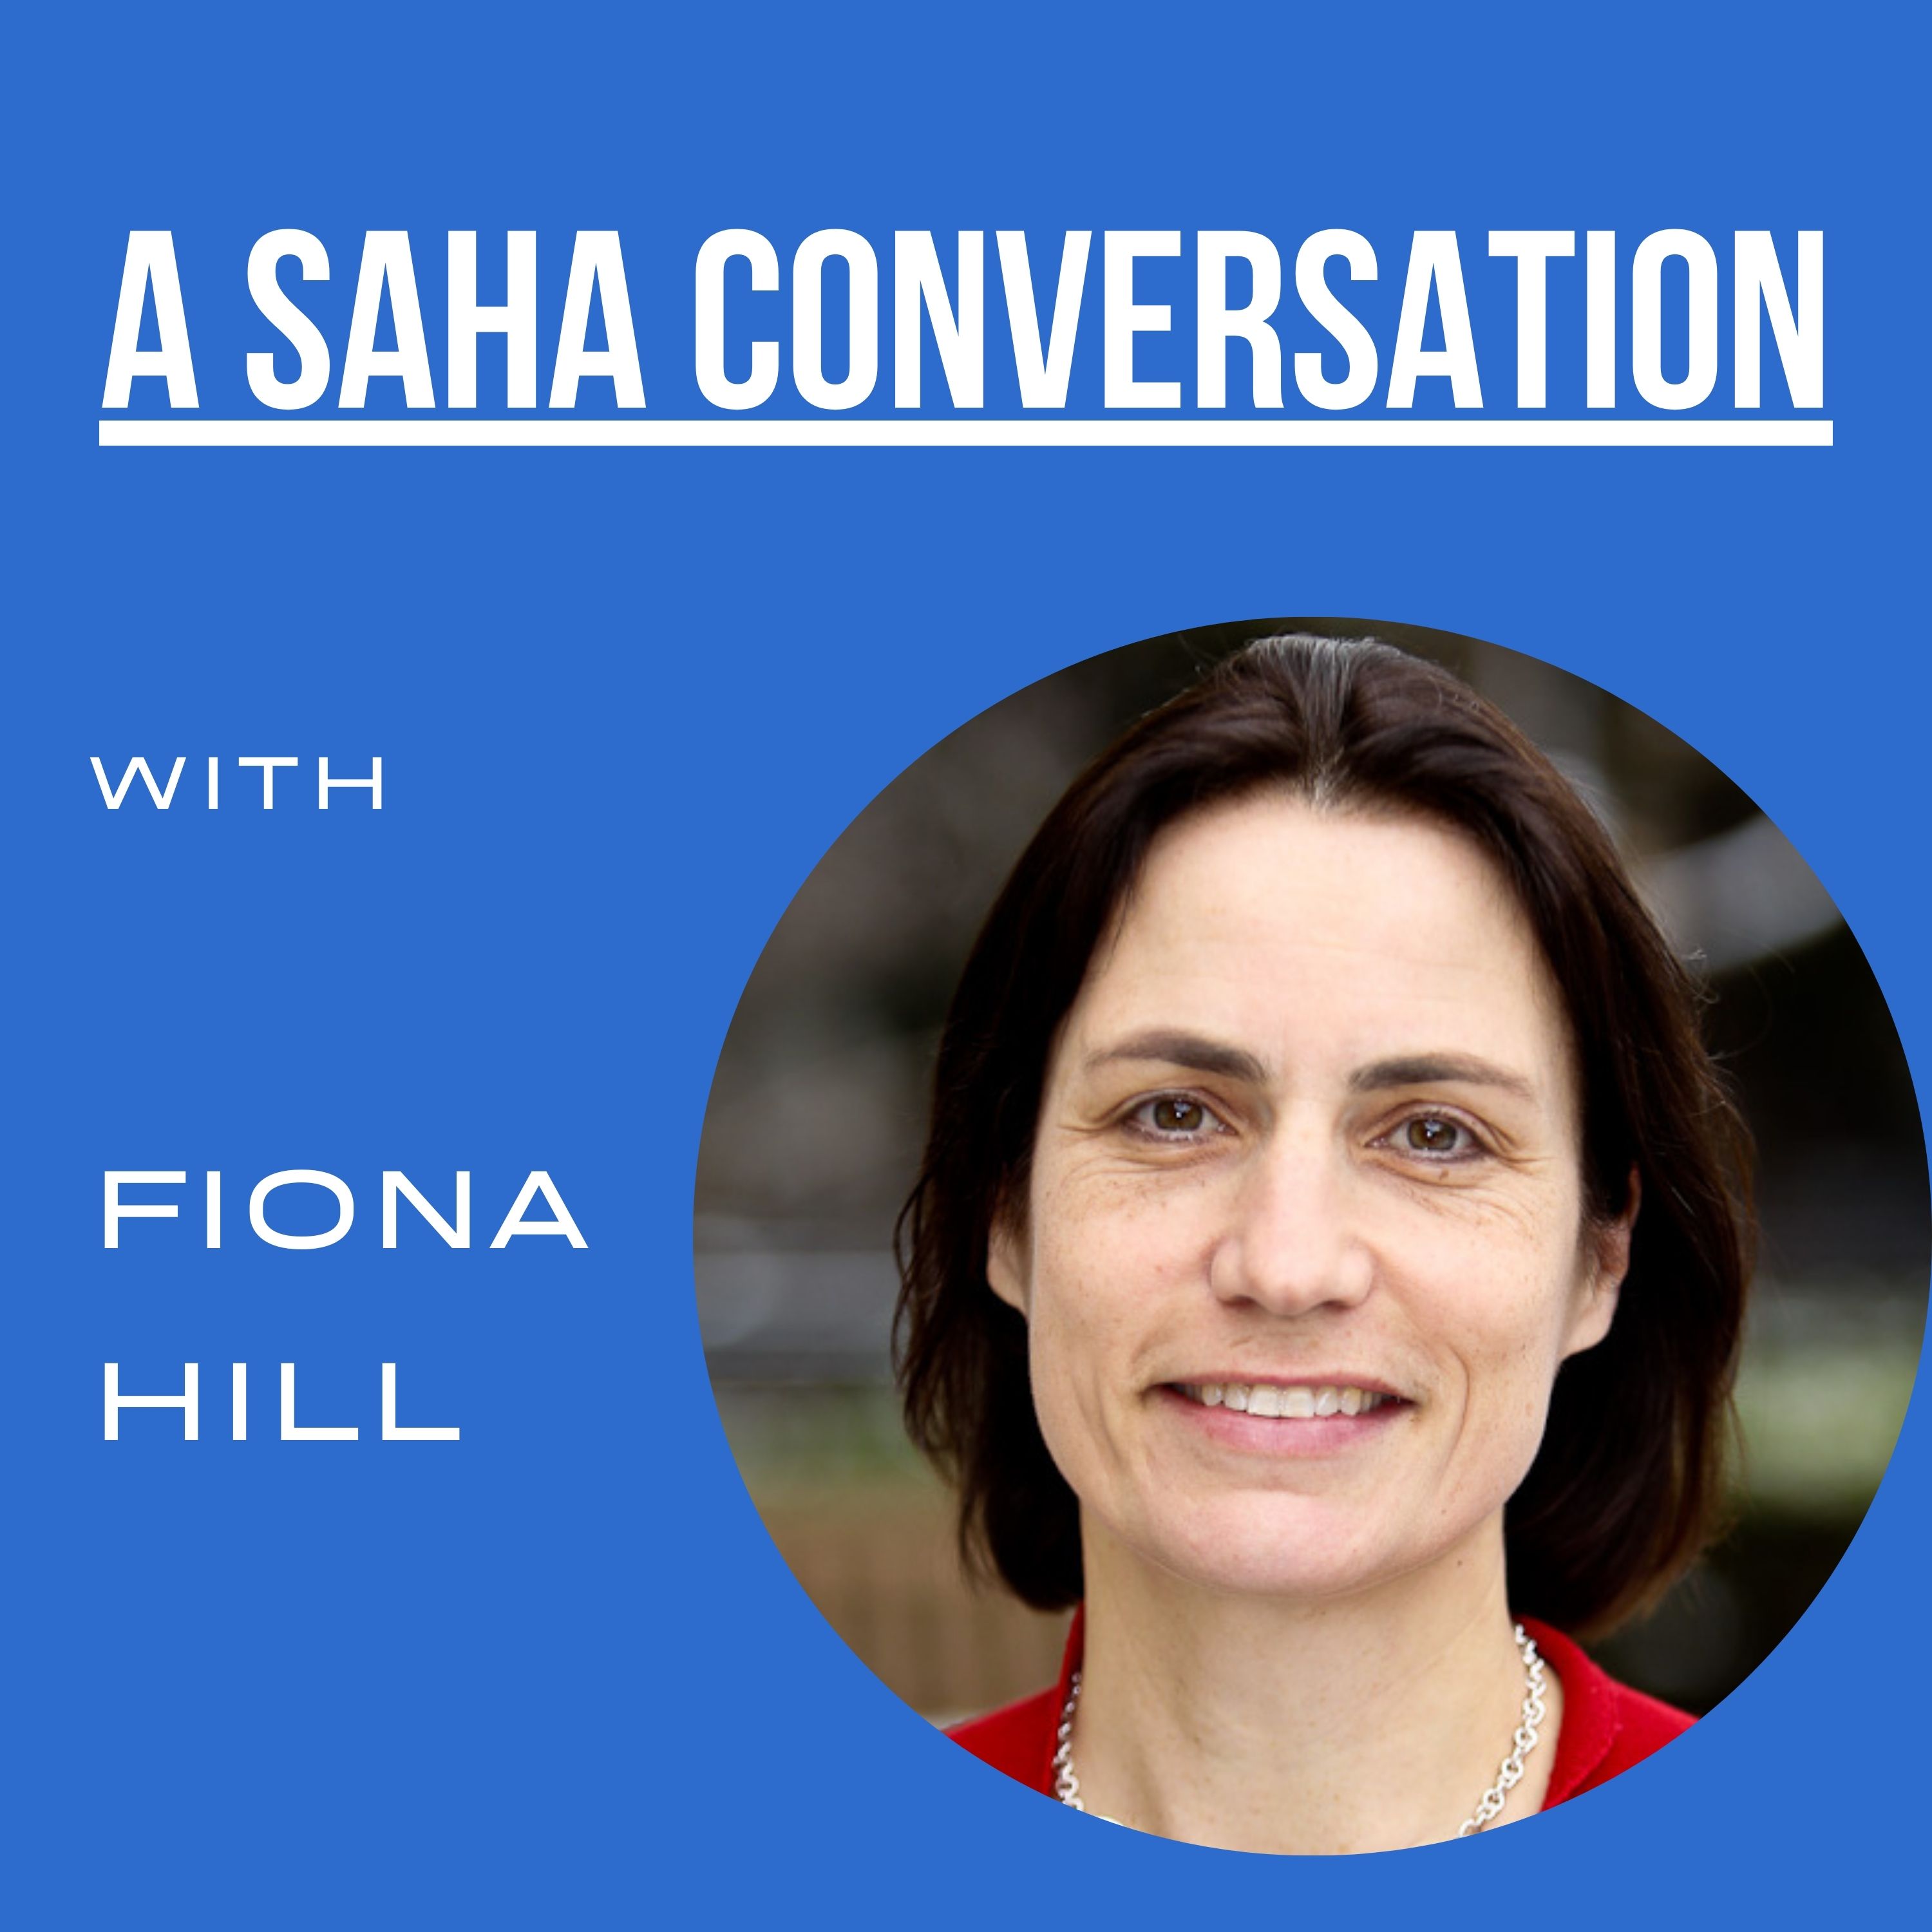 A SAHA Conversation with Fiona Hill